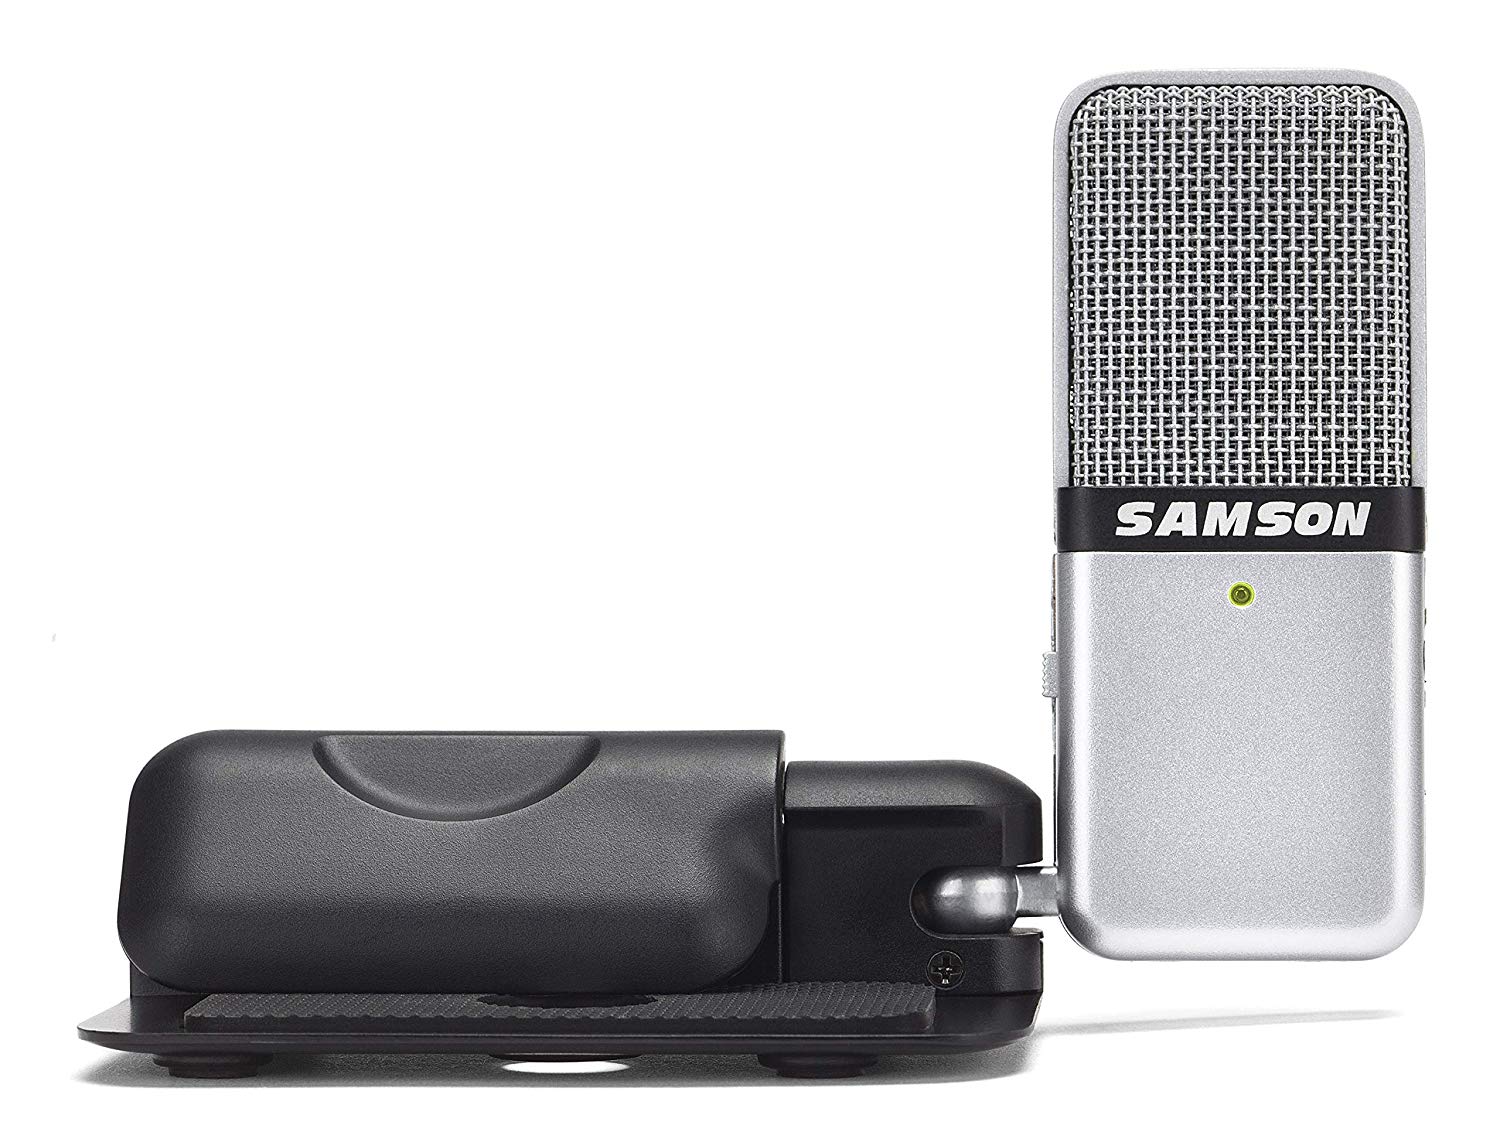 Go Portable Microphone by Samson